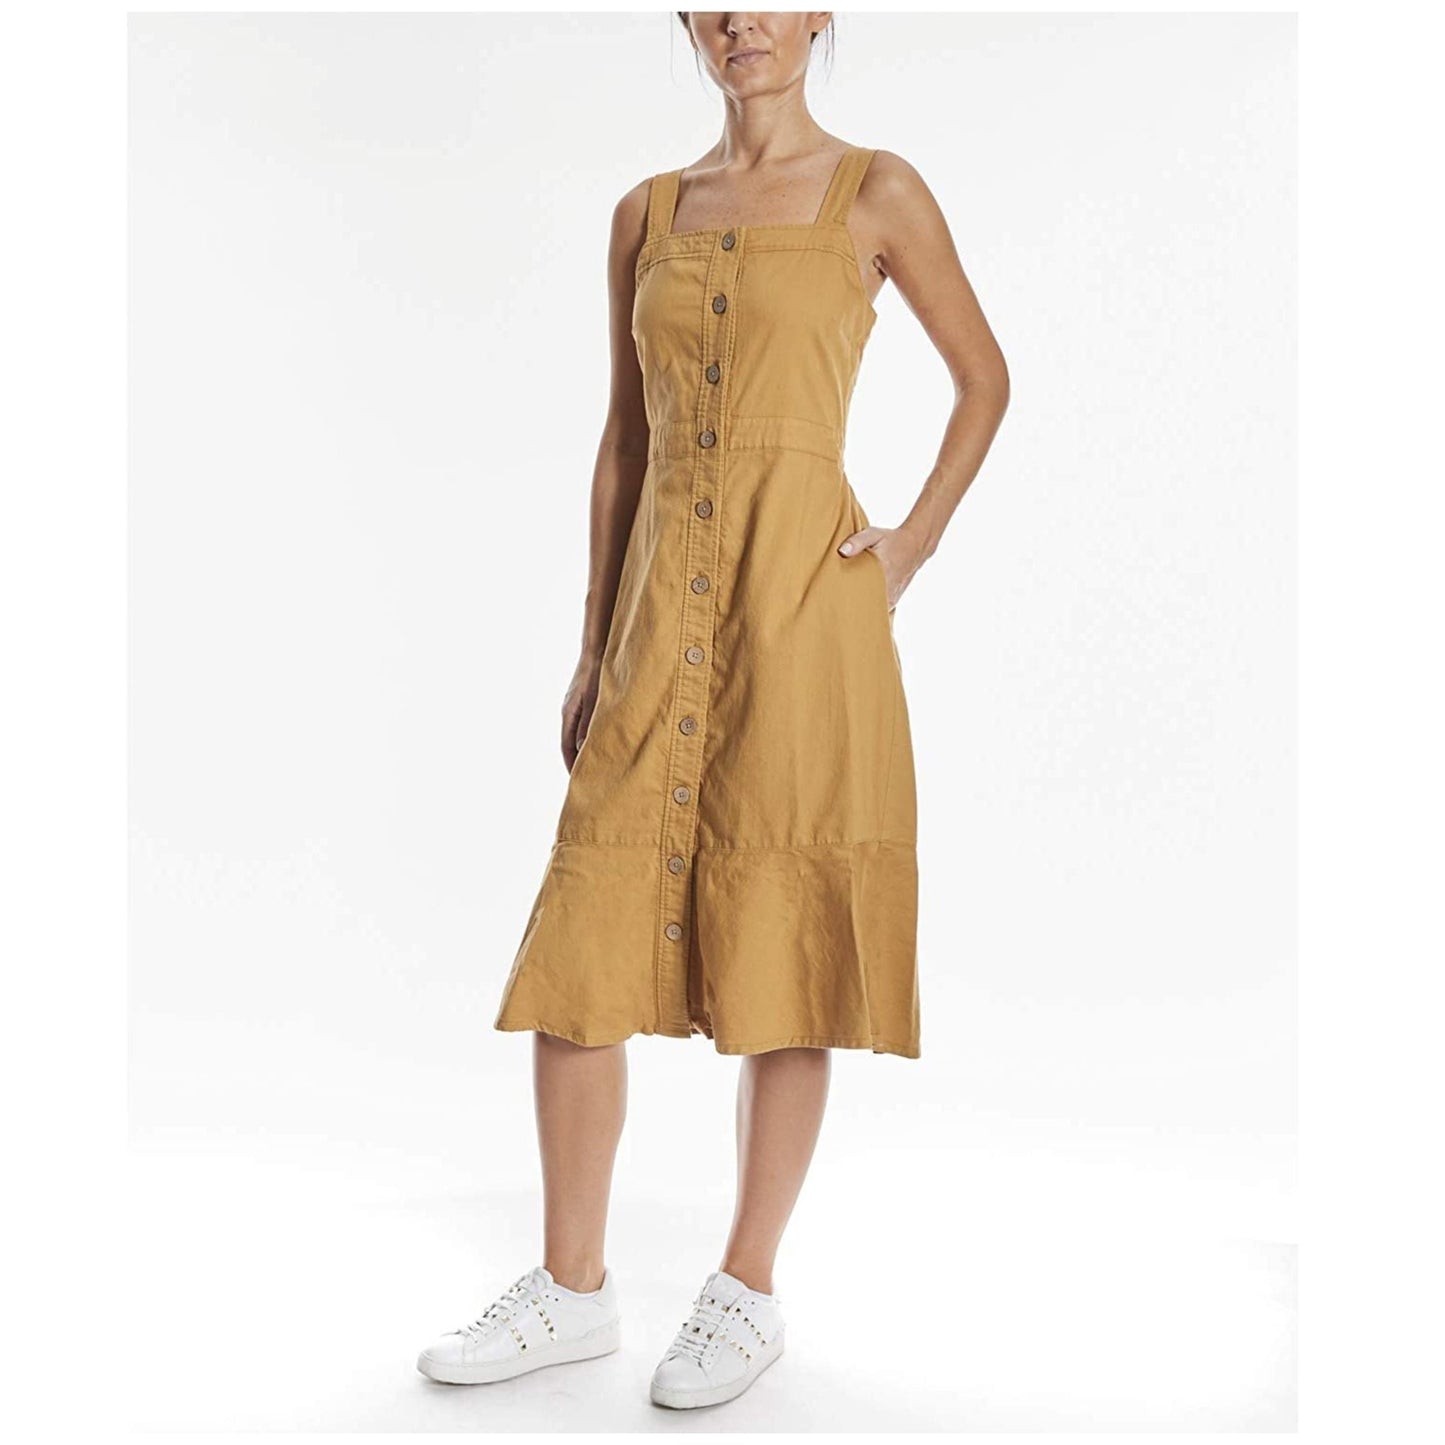 OAT-100% Cotton Midi Dress - OAT (Flounce Midi Dress) Mustard (Size X-Small) - Brandat Outlet